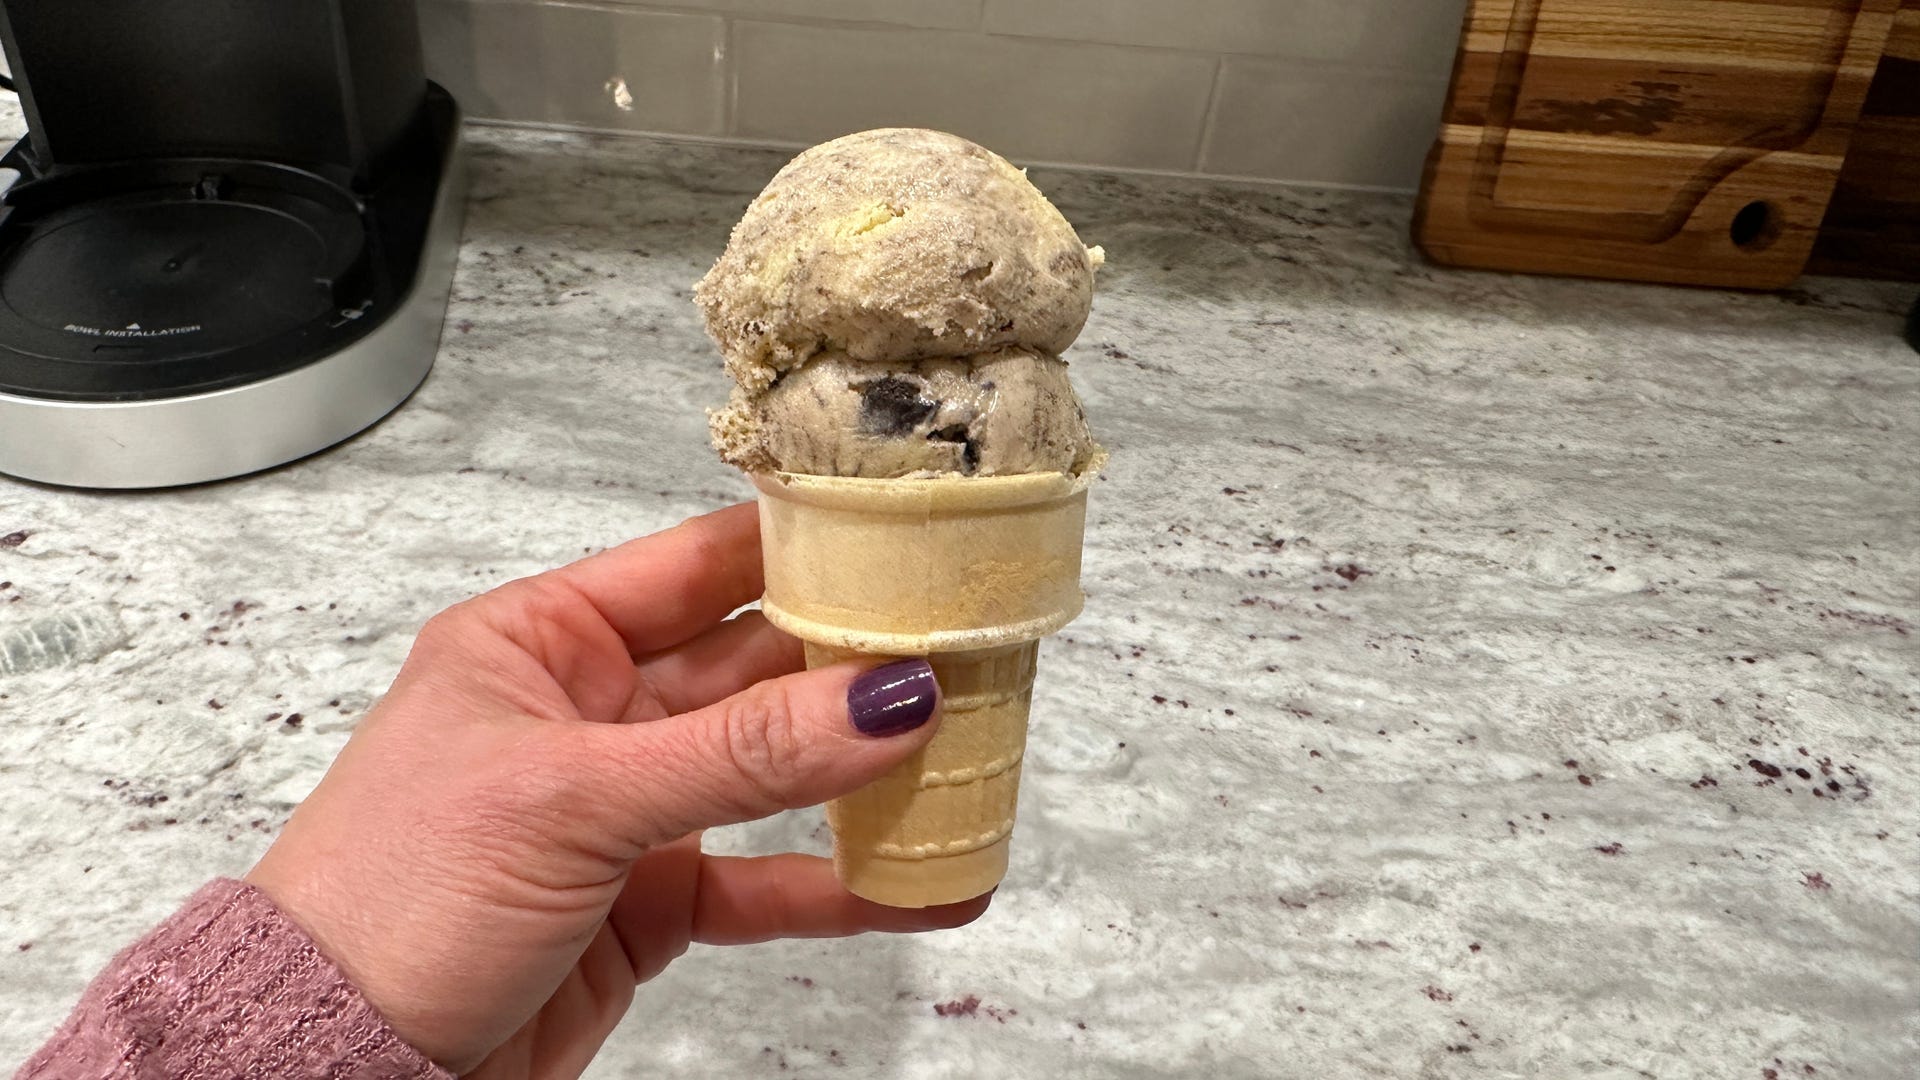 How to Make the Best Ninja CREAMi Ice Cream